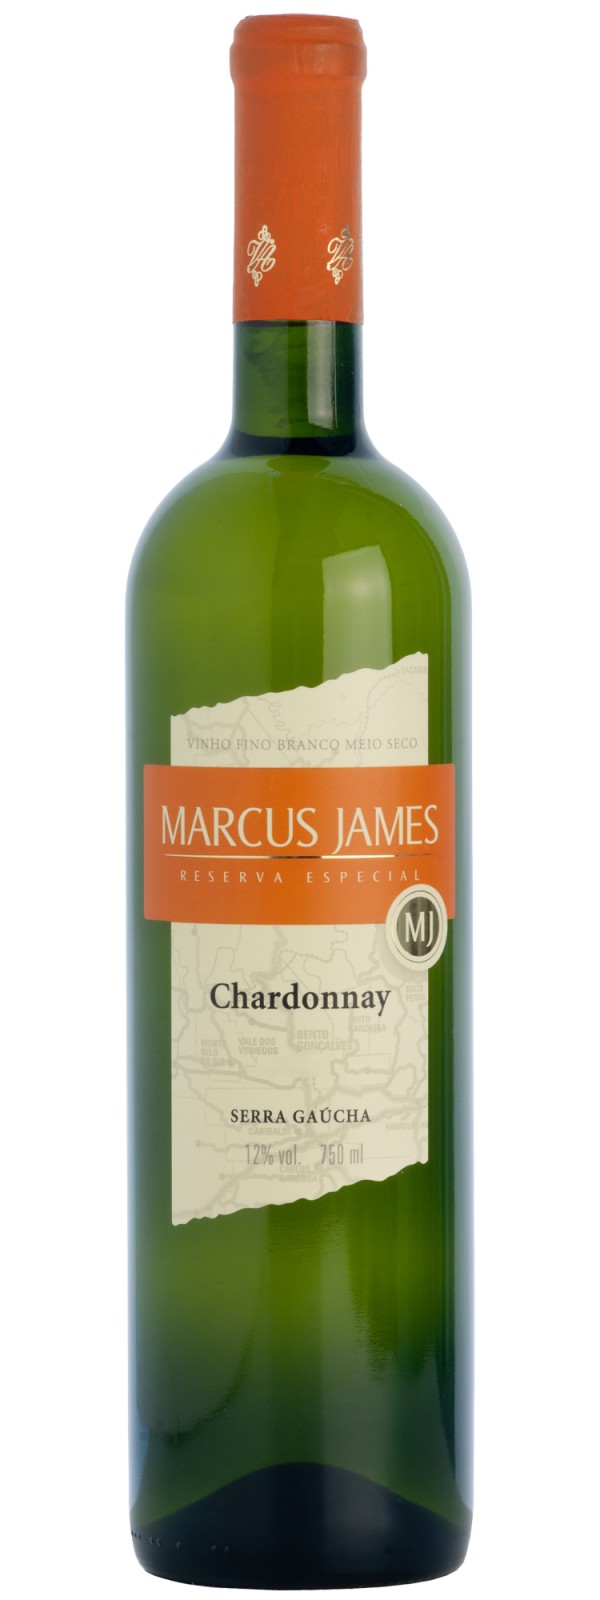 Vinho Marcus James branco chardonnay 750 ml